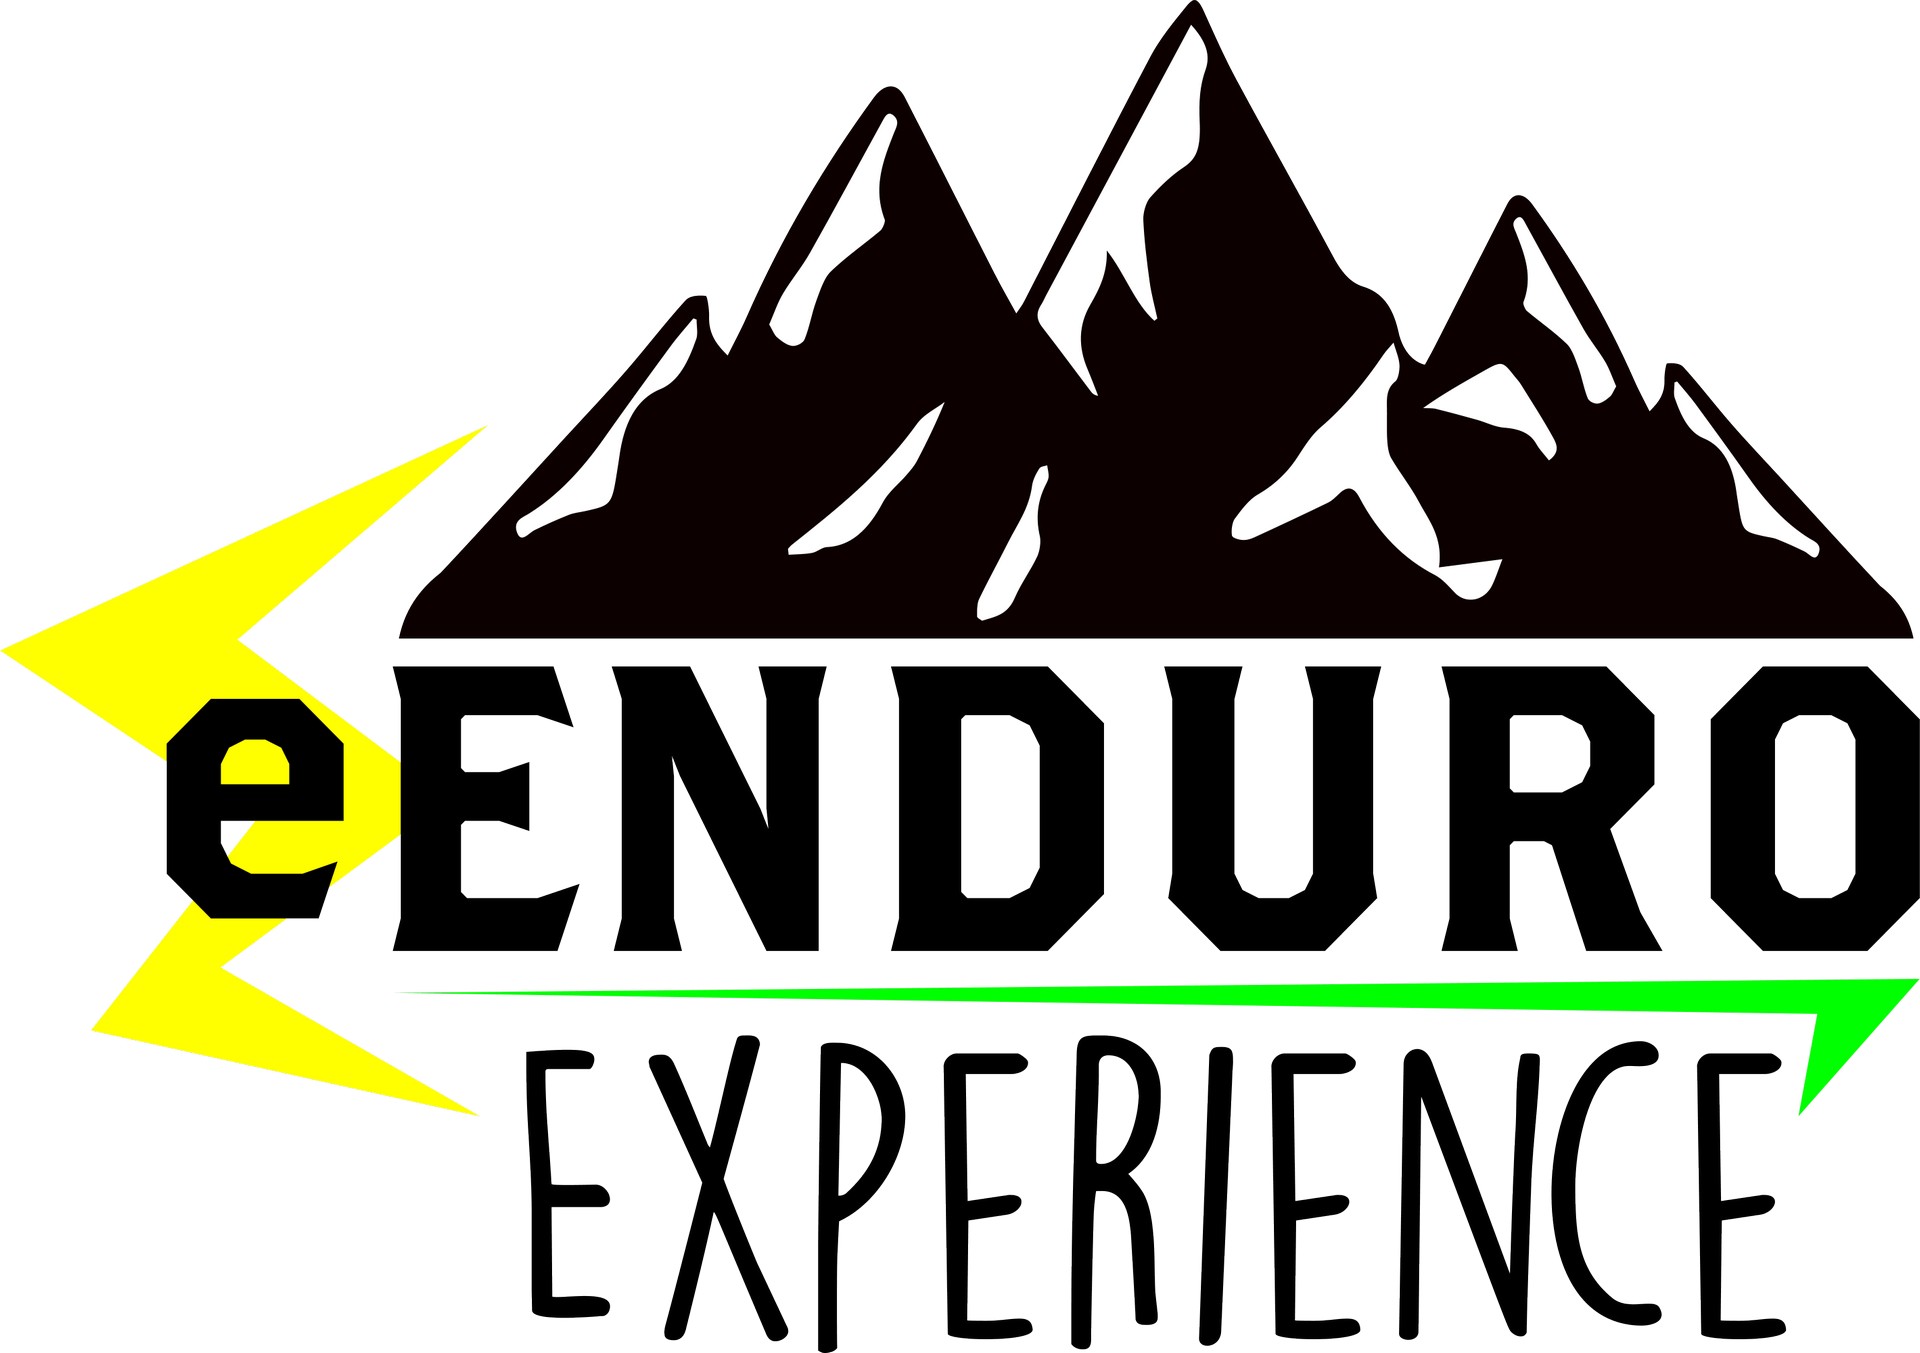 e-Enduro Experience